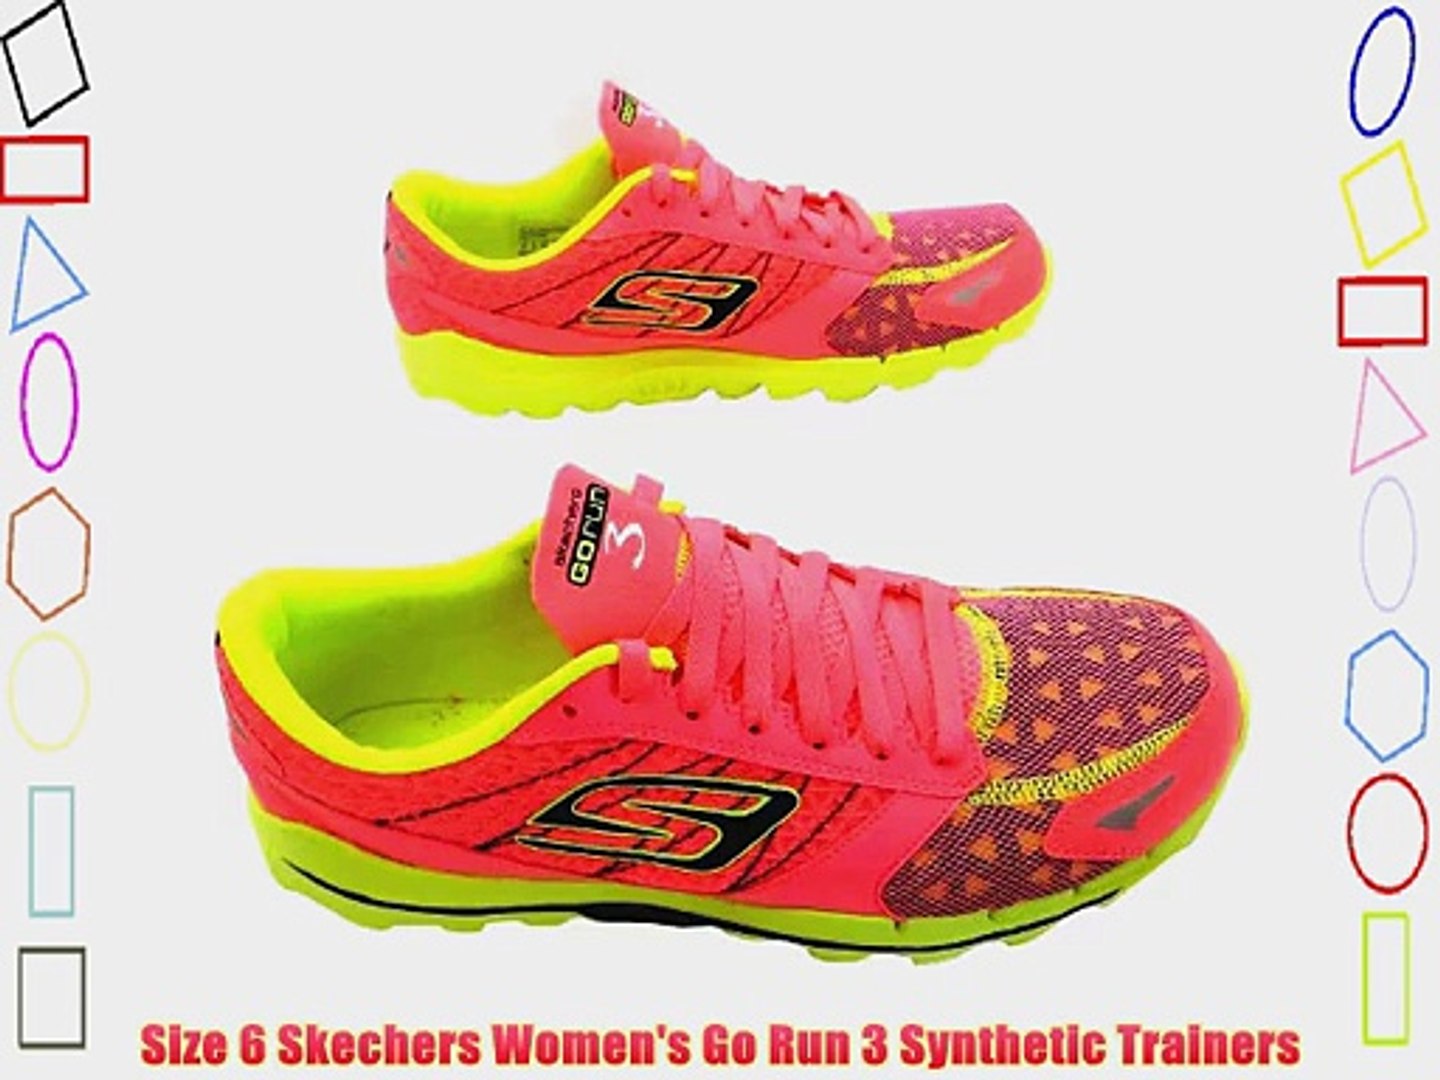 Size 6 Skechers Women's Go Run 3 